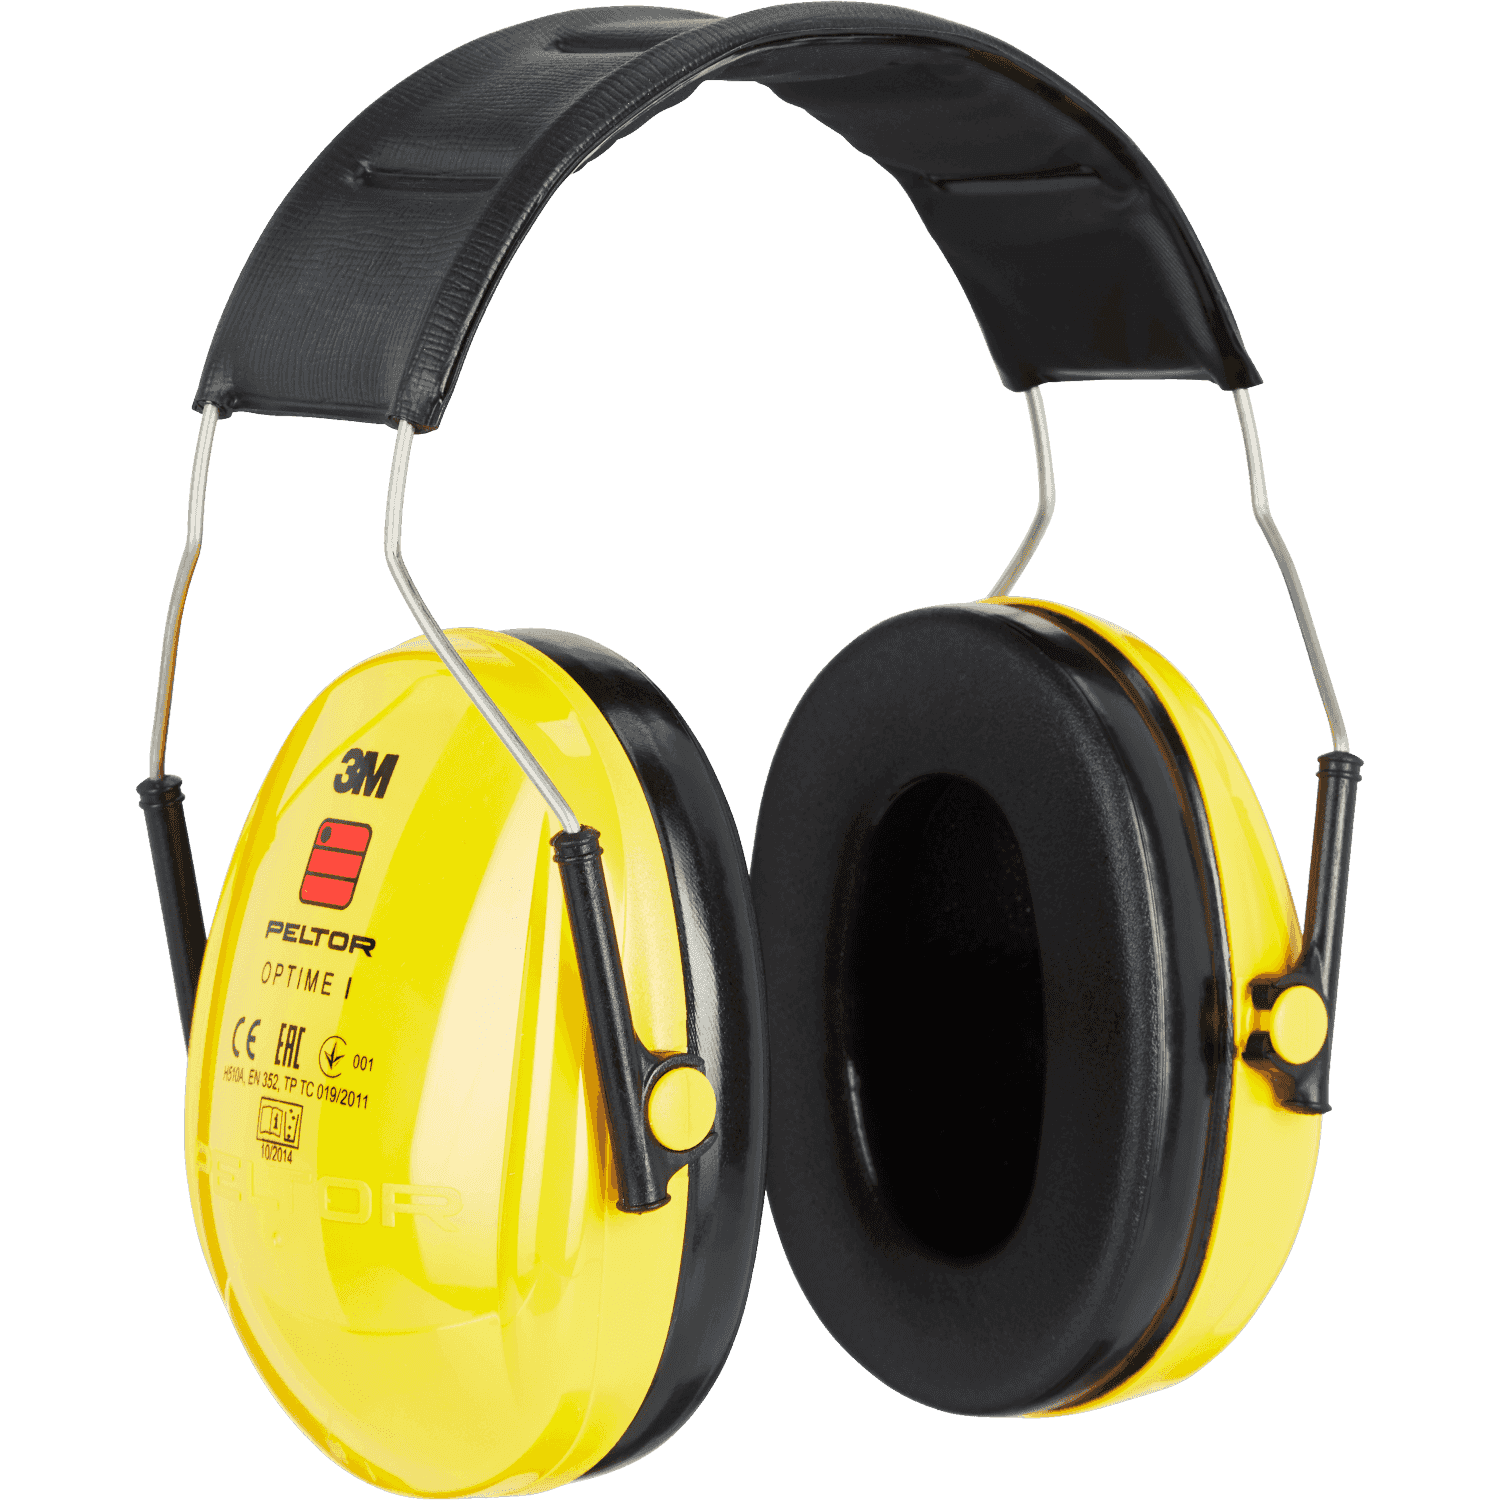 xh001650411-3m-peltor-optime-i-ear-muffs-26-db-yellow-headband-h510a-401-gu crop_O nb.png